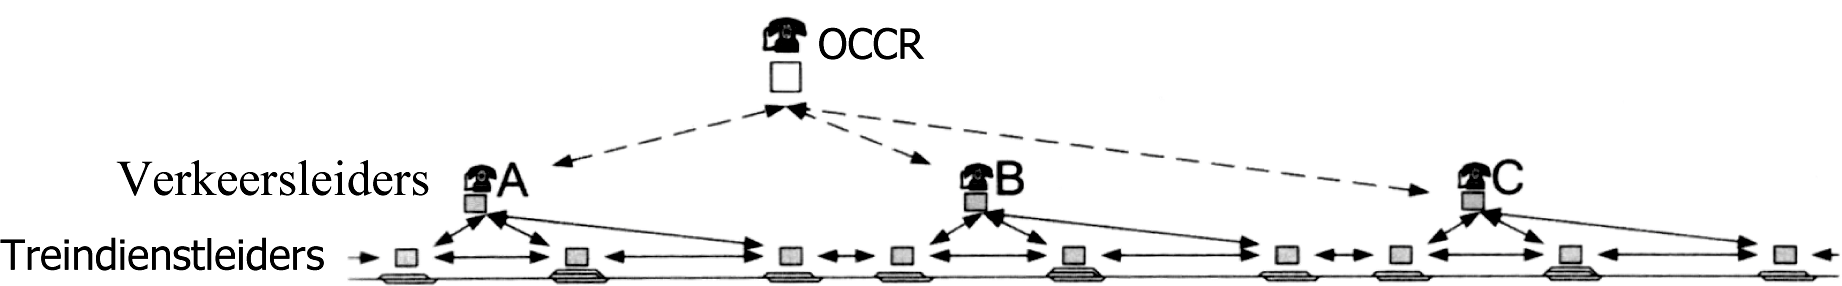 Figuur 9 Hiërarchie binnen de operationele railverkeersleiding